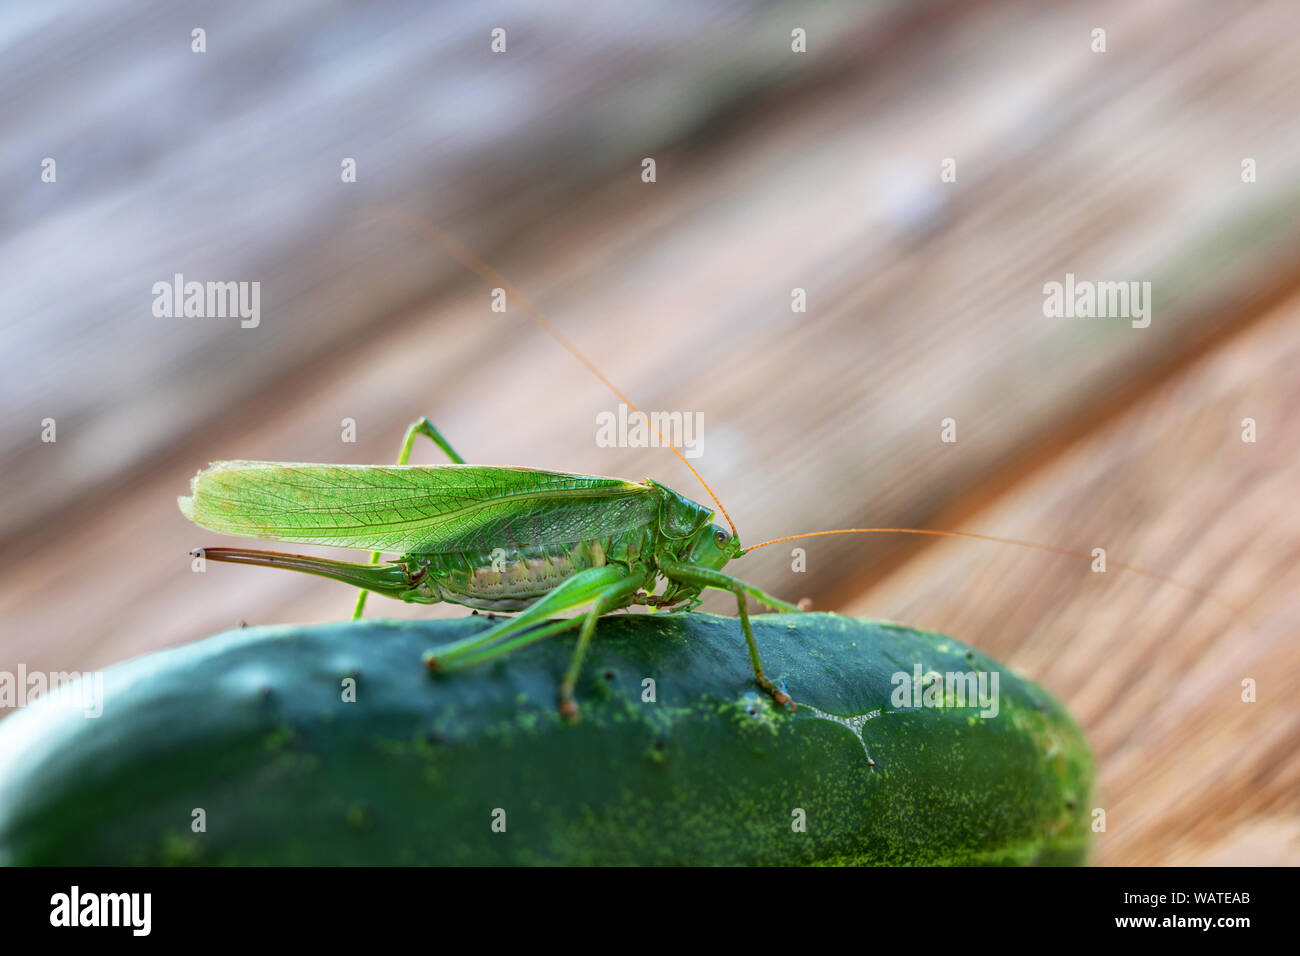 feeding insect on cucumber, desert locust. locust or grasshopper Stock Photo